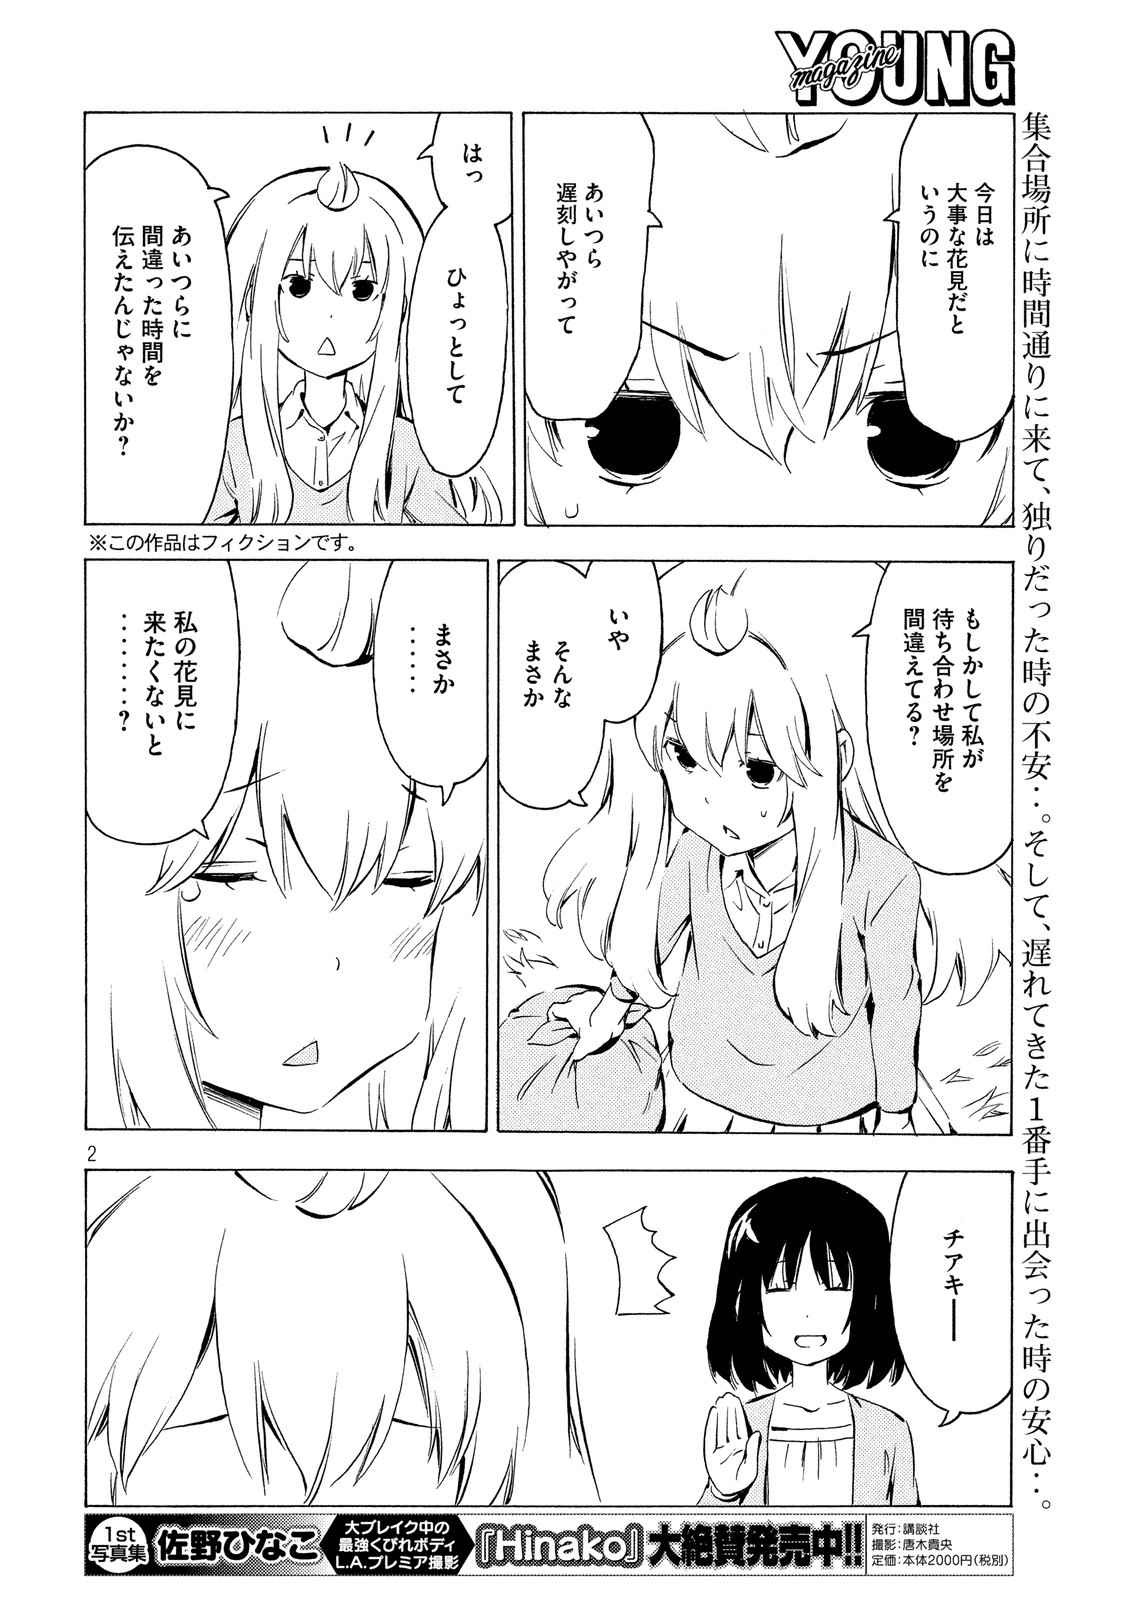 Minami-ke - Chapter 314 - Page 2